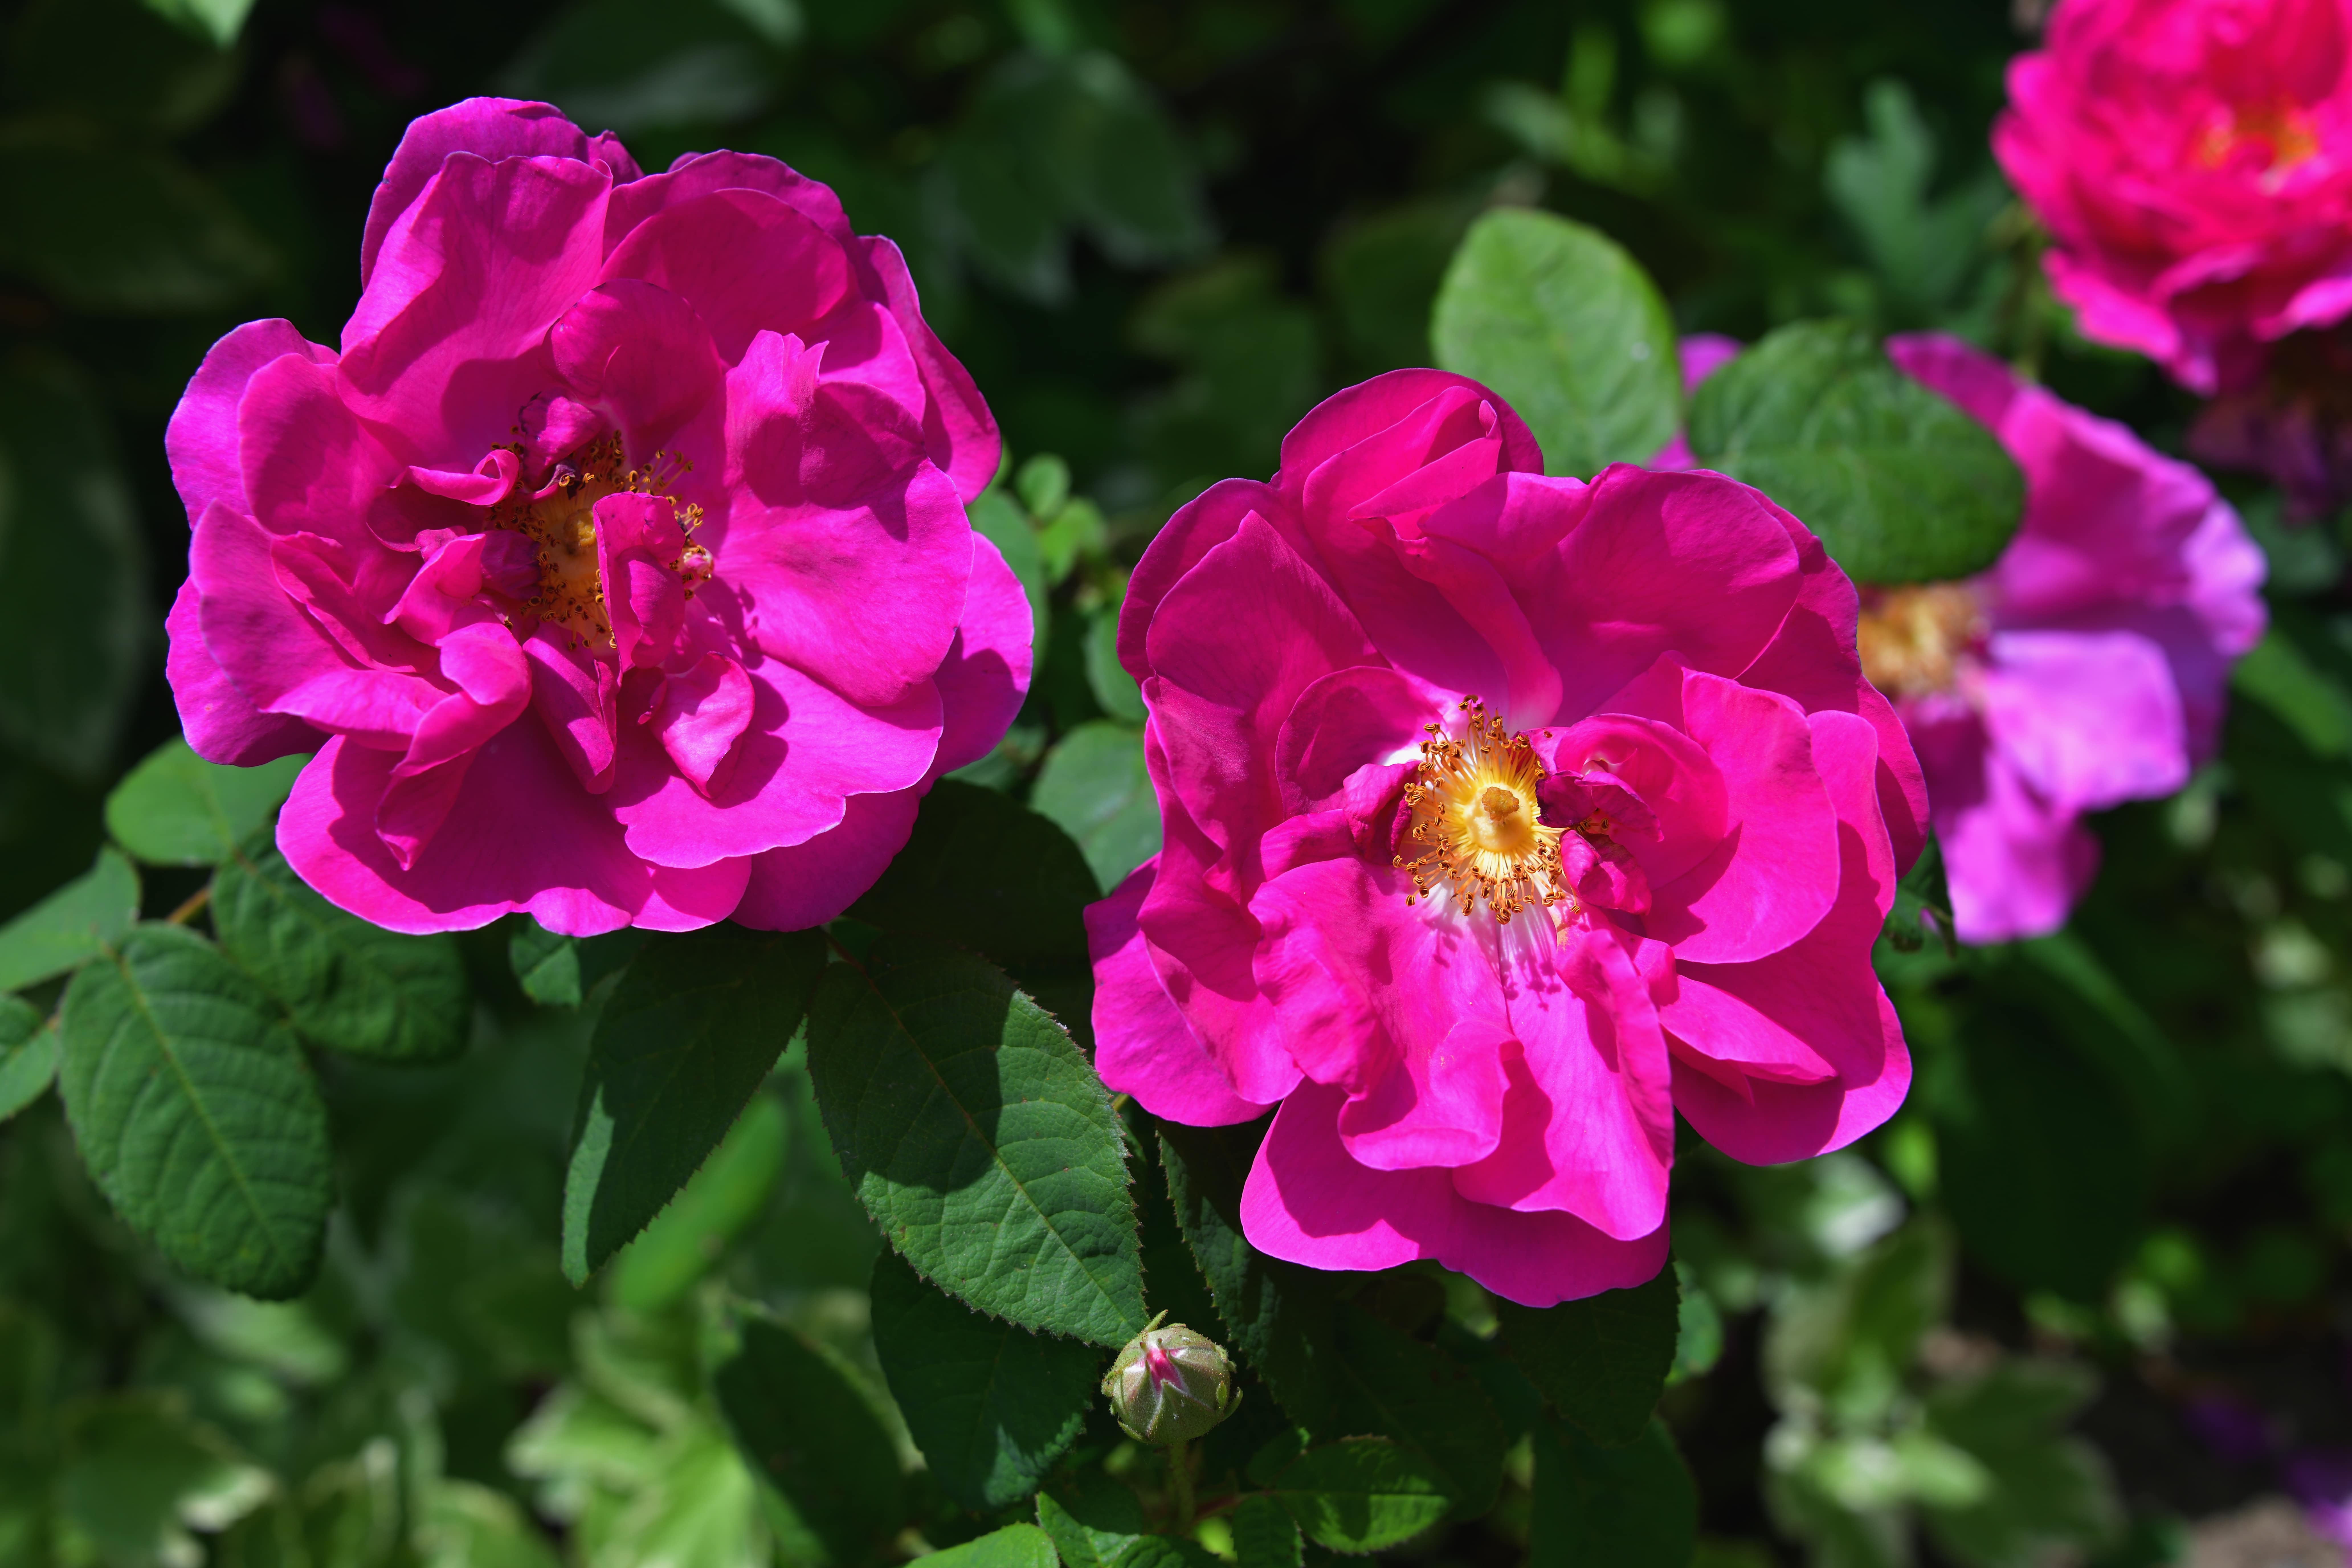 Shrub rose in bloom in a garden.